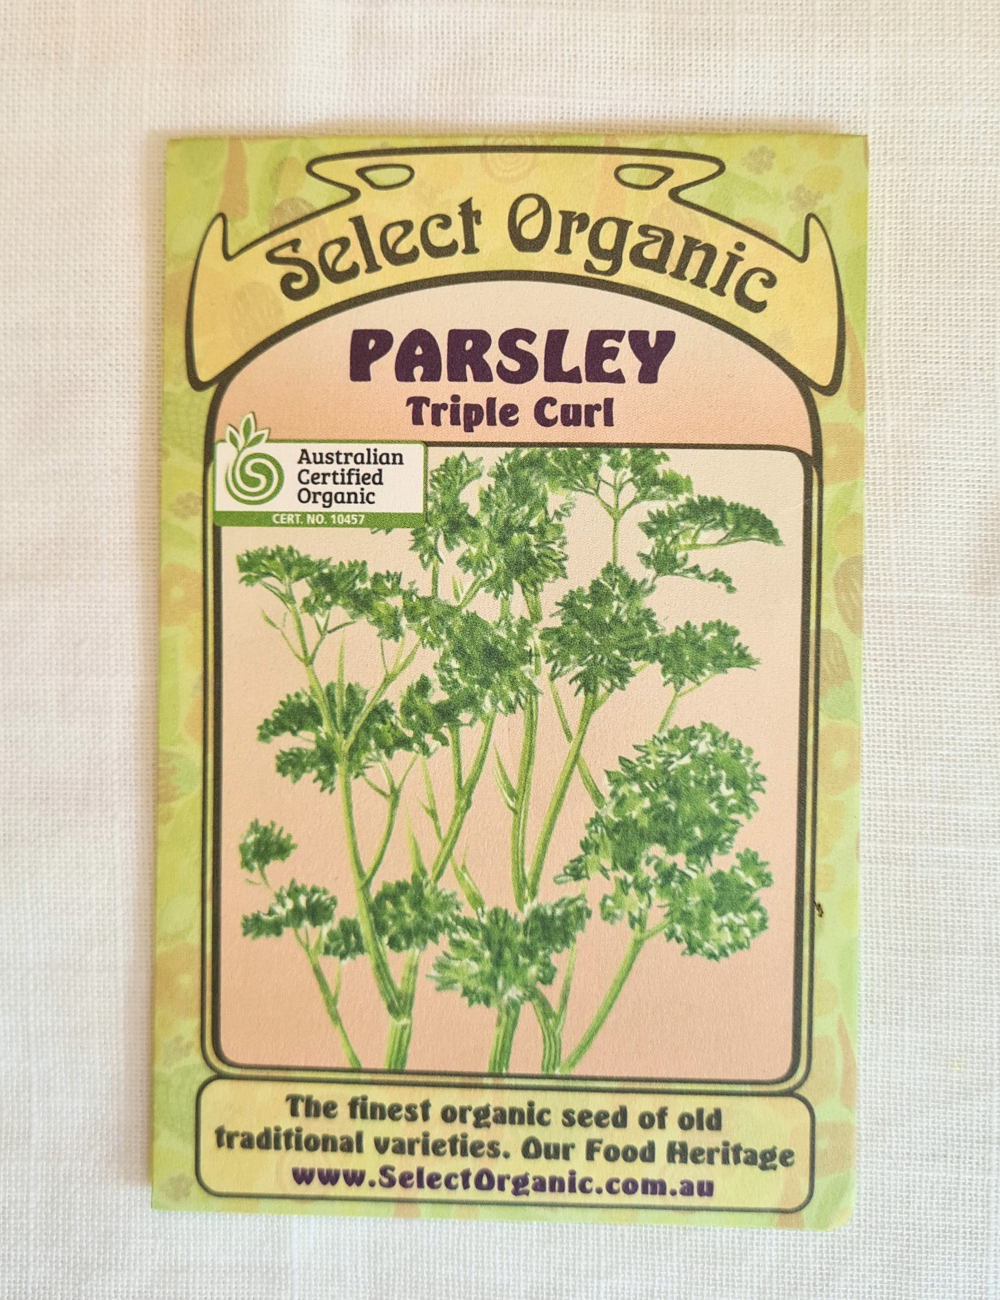 Select Organic Seeds